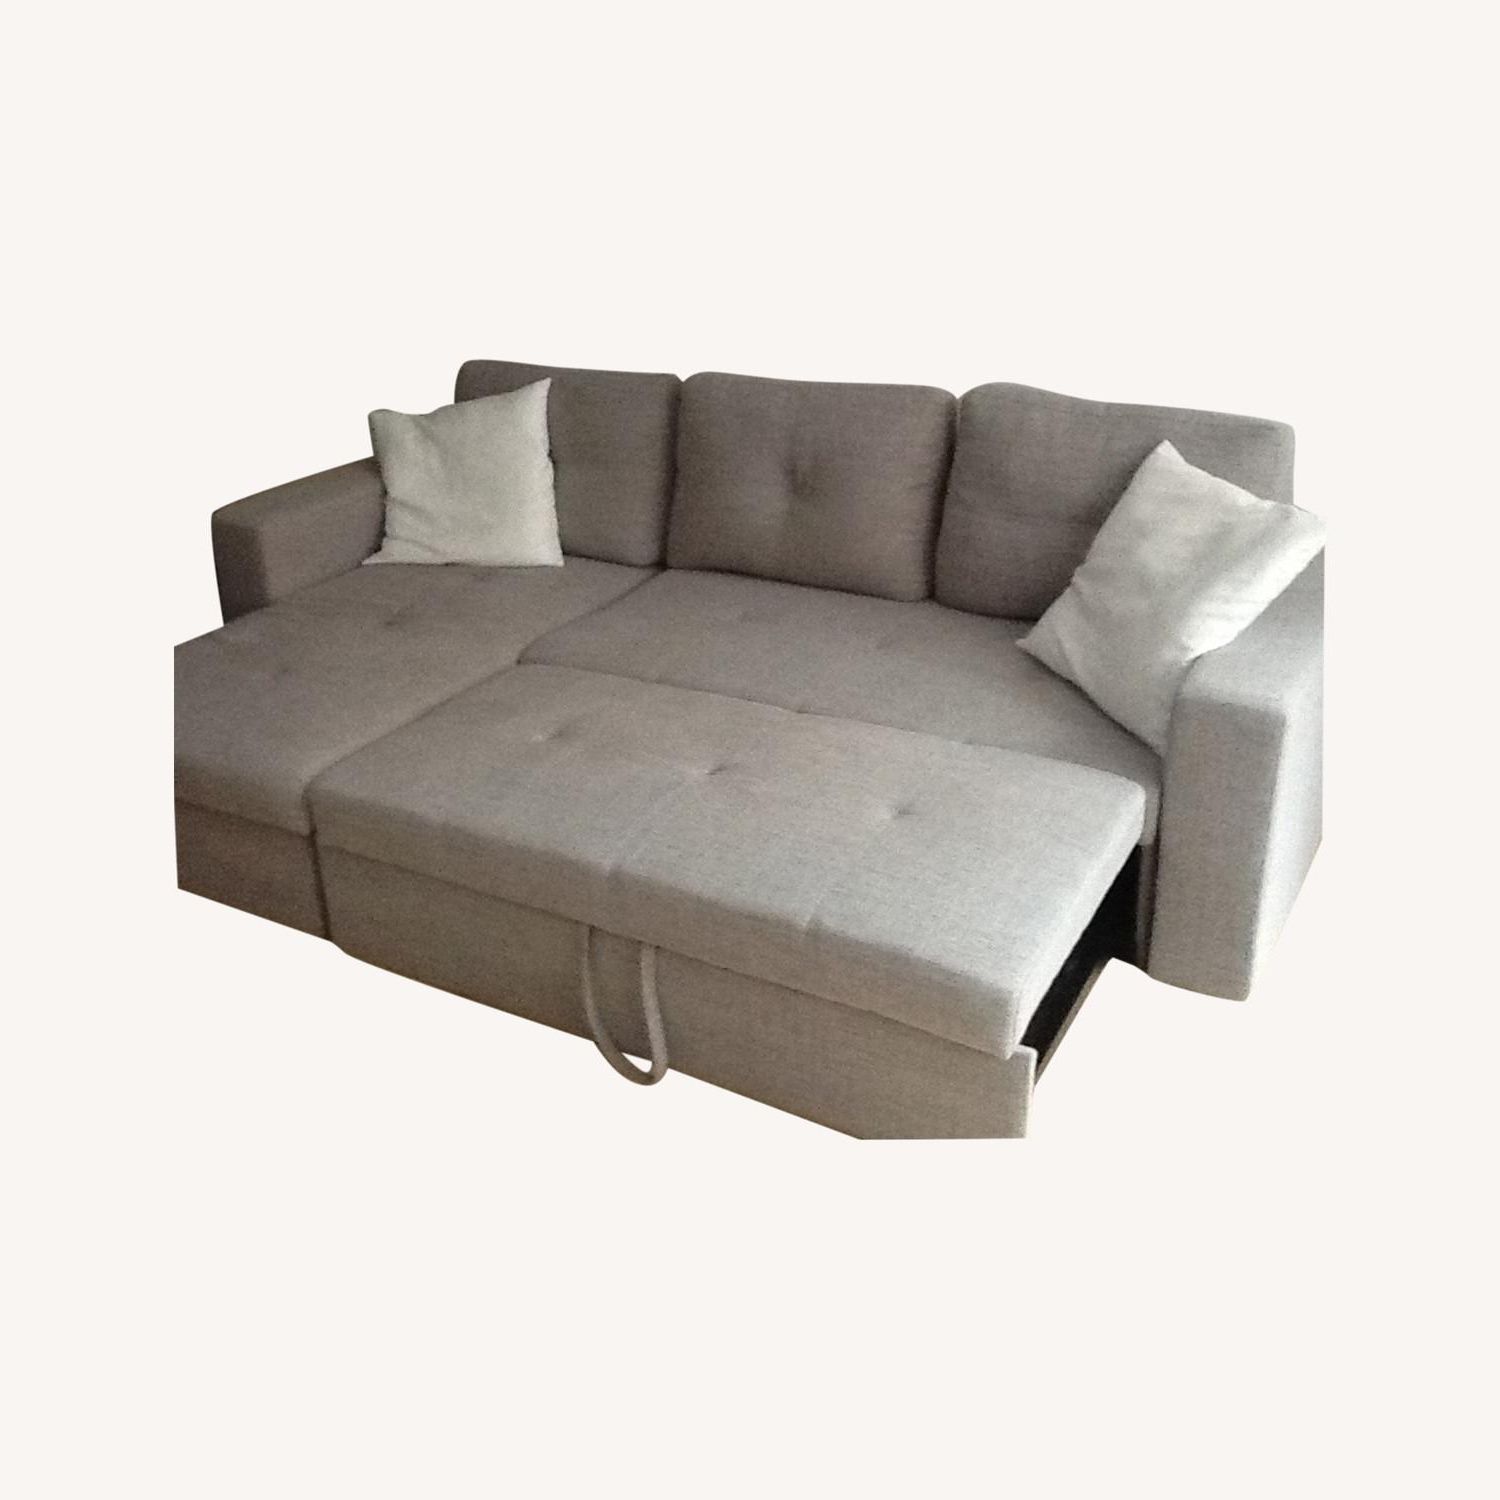 Grey Pull Out Sleeper Sofa – Aptdeco With Regard To 3 In 1 Gray Pull Out Sleeper Sofas (View 7 of 20)